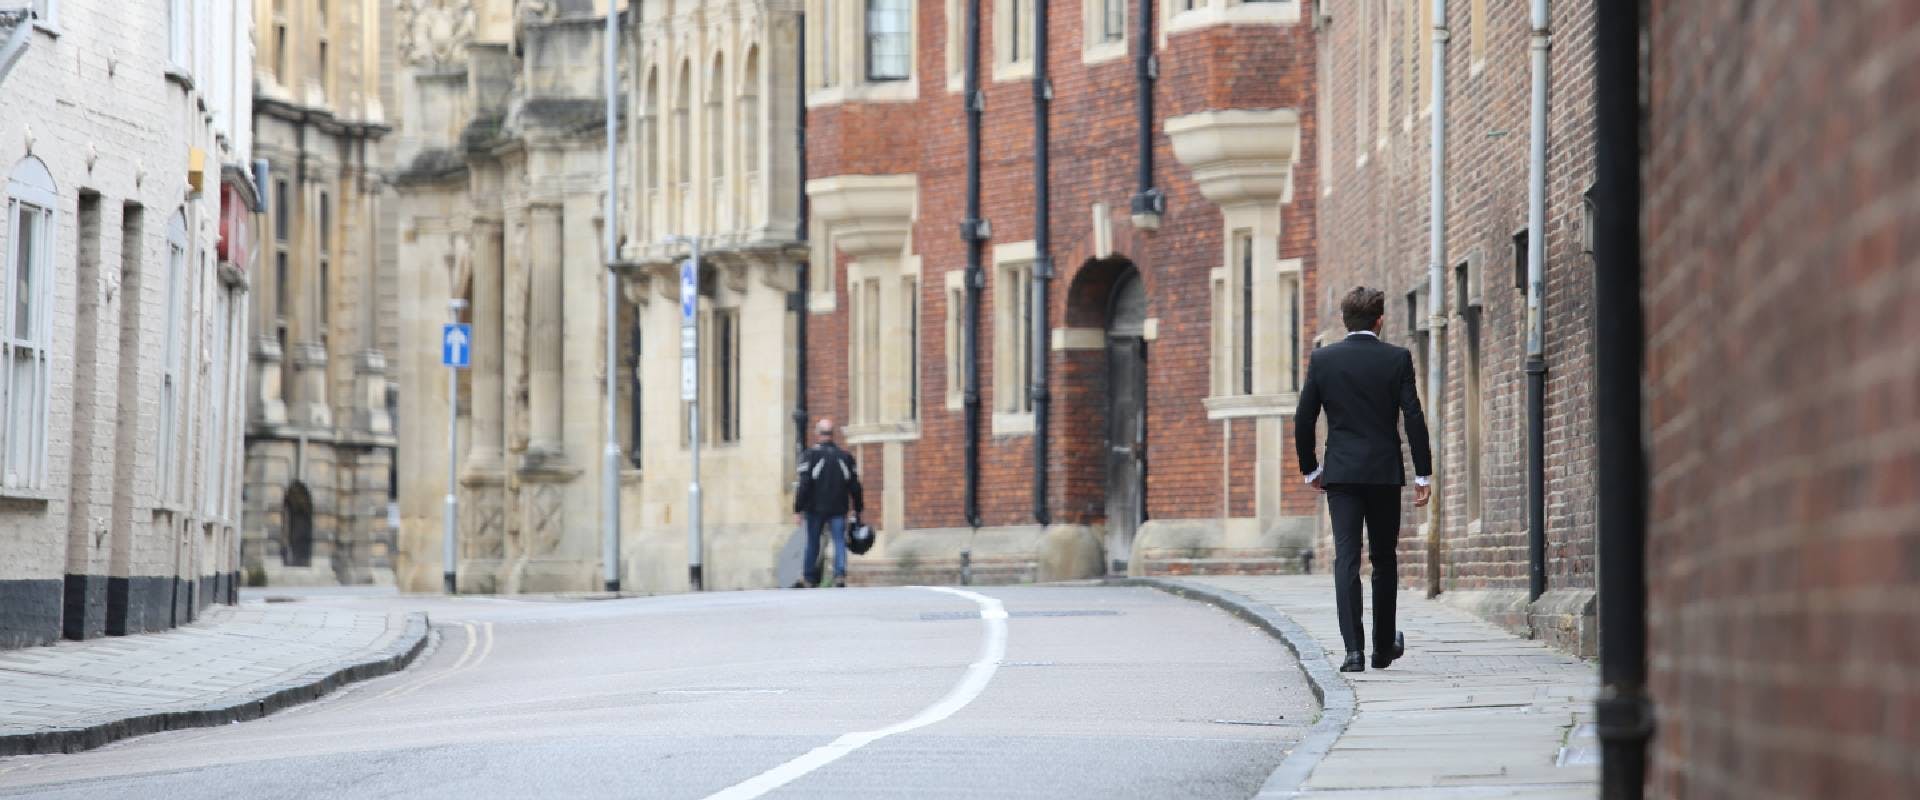 A person walking down a Cambridge street